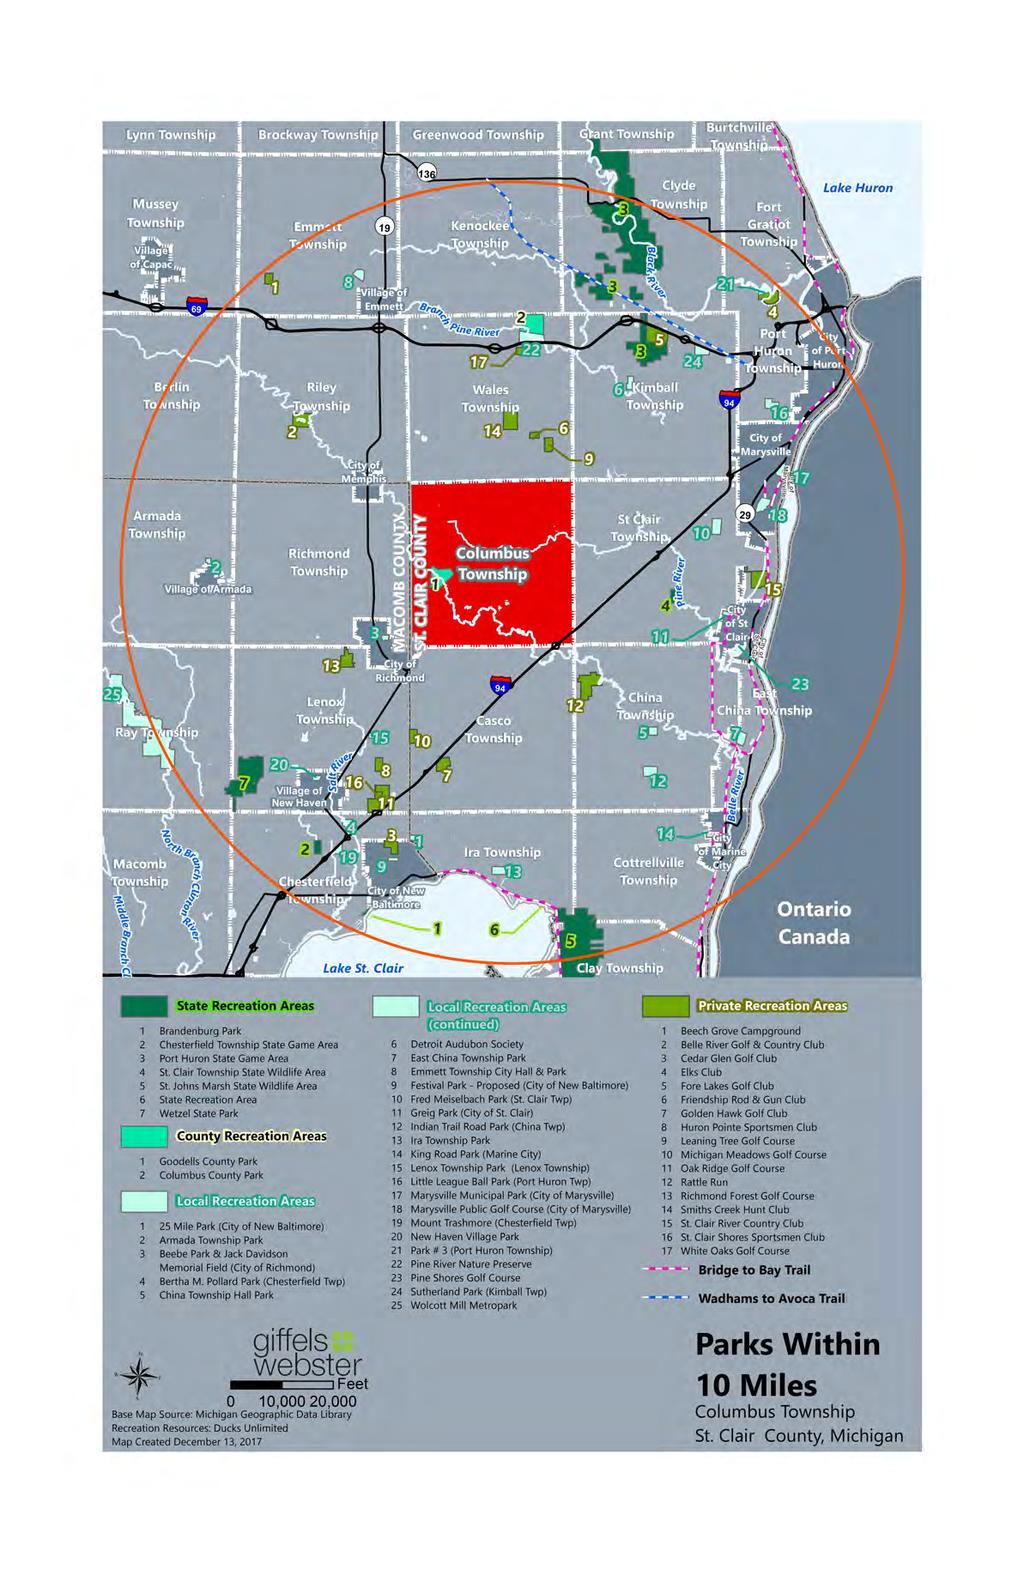 Map 4: Facilities within a Ten-Mile Radius of Columbus